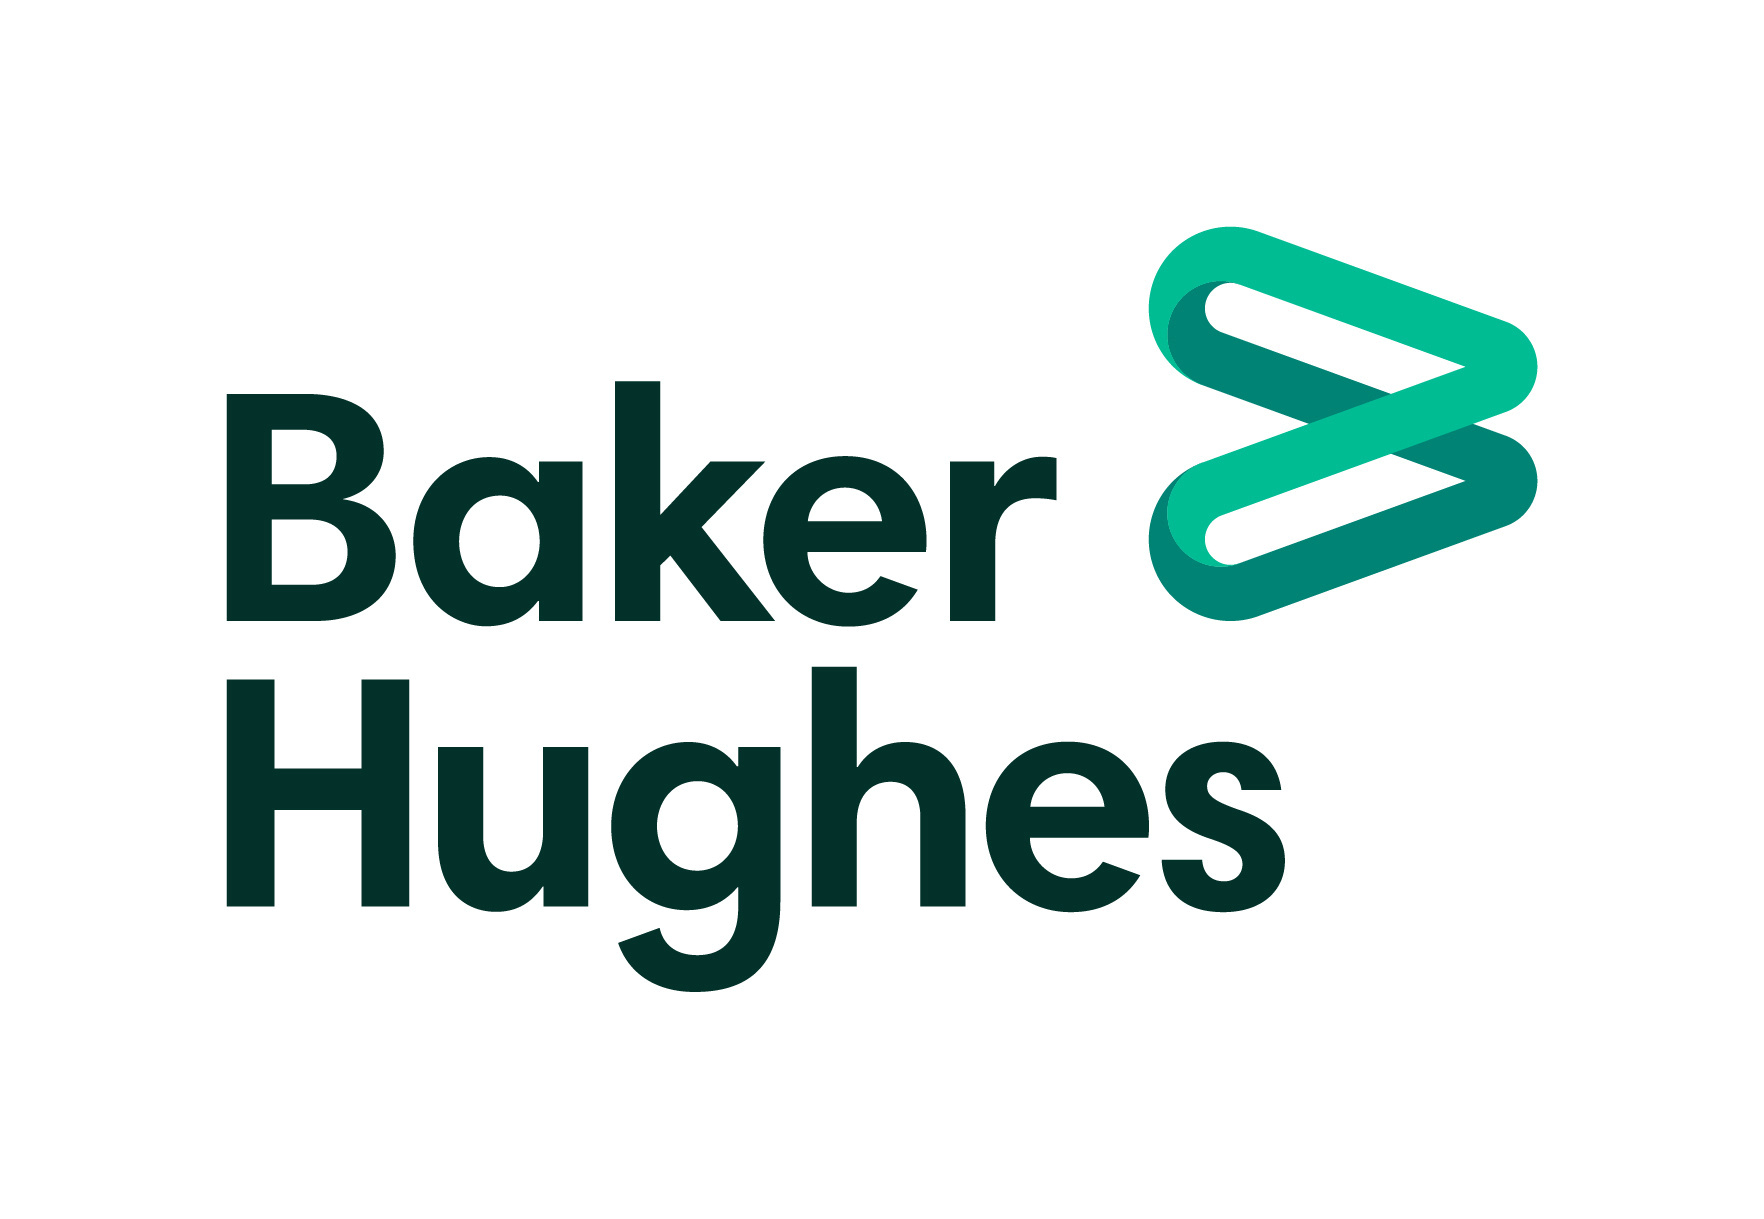 The logo of Baker Hughes